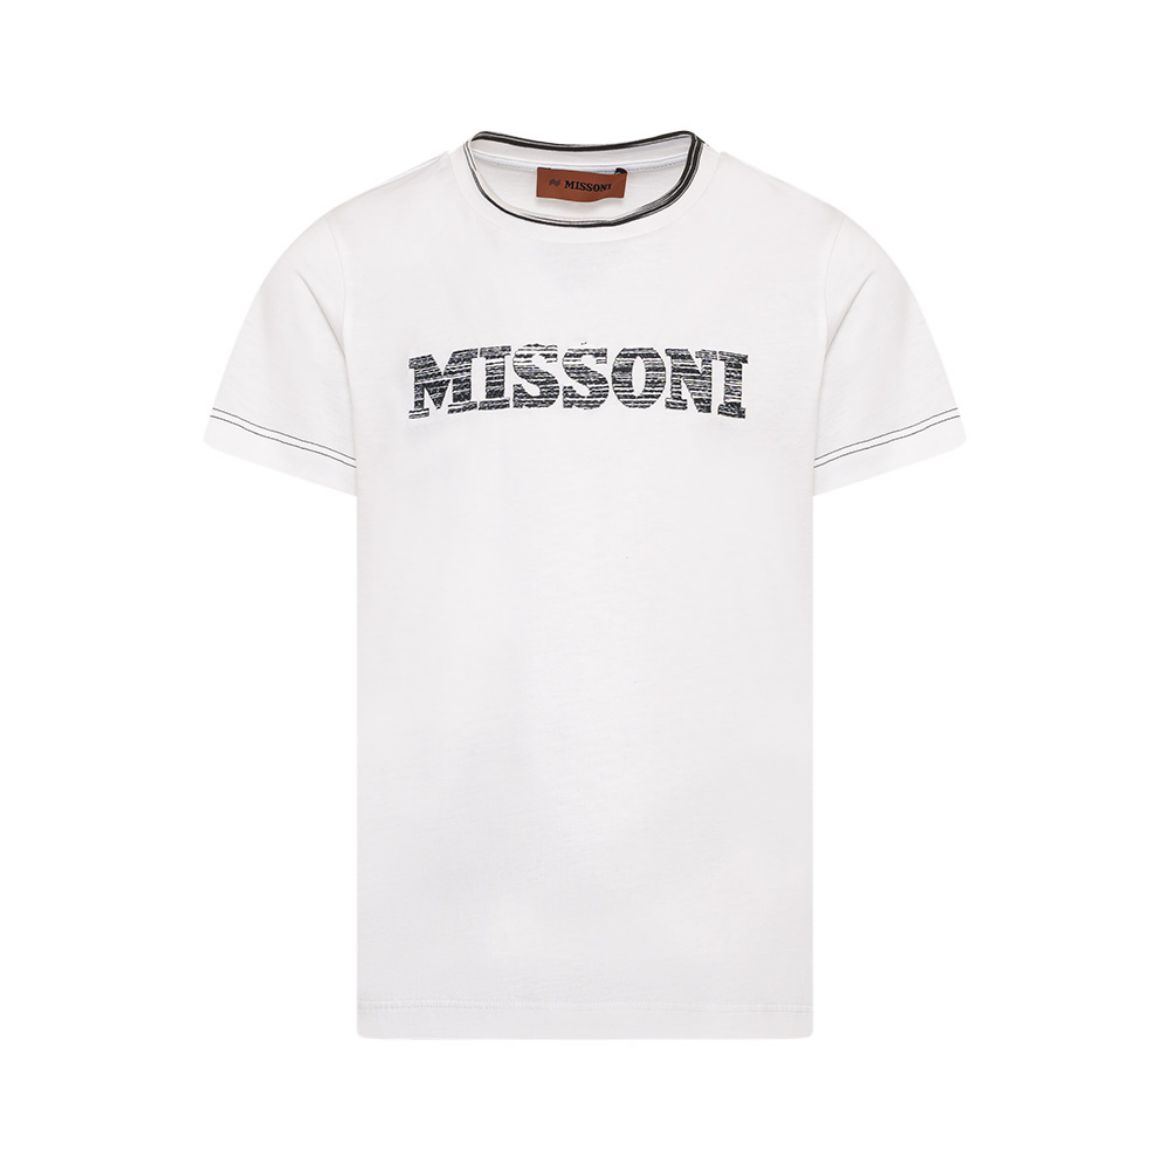 Missoni Boys White & Black Logo T-Shirt